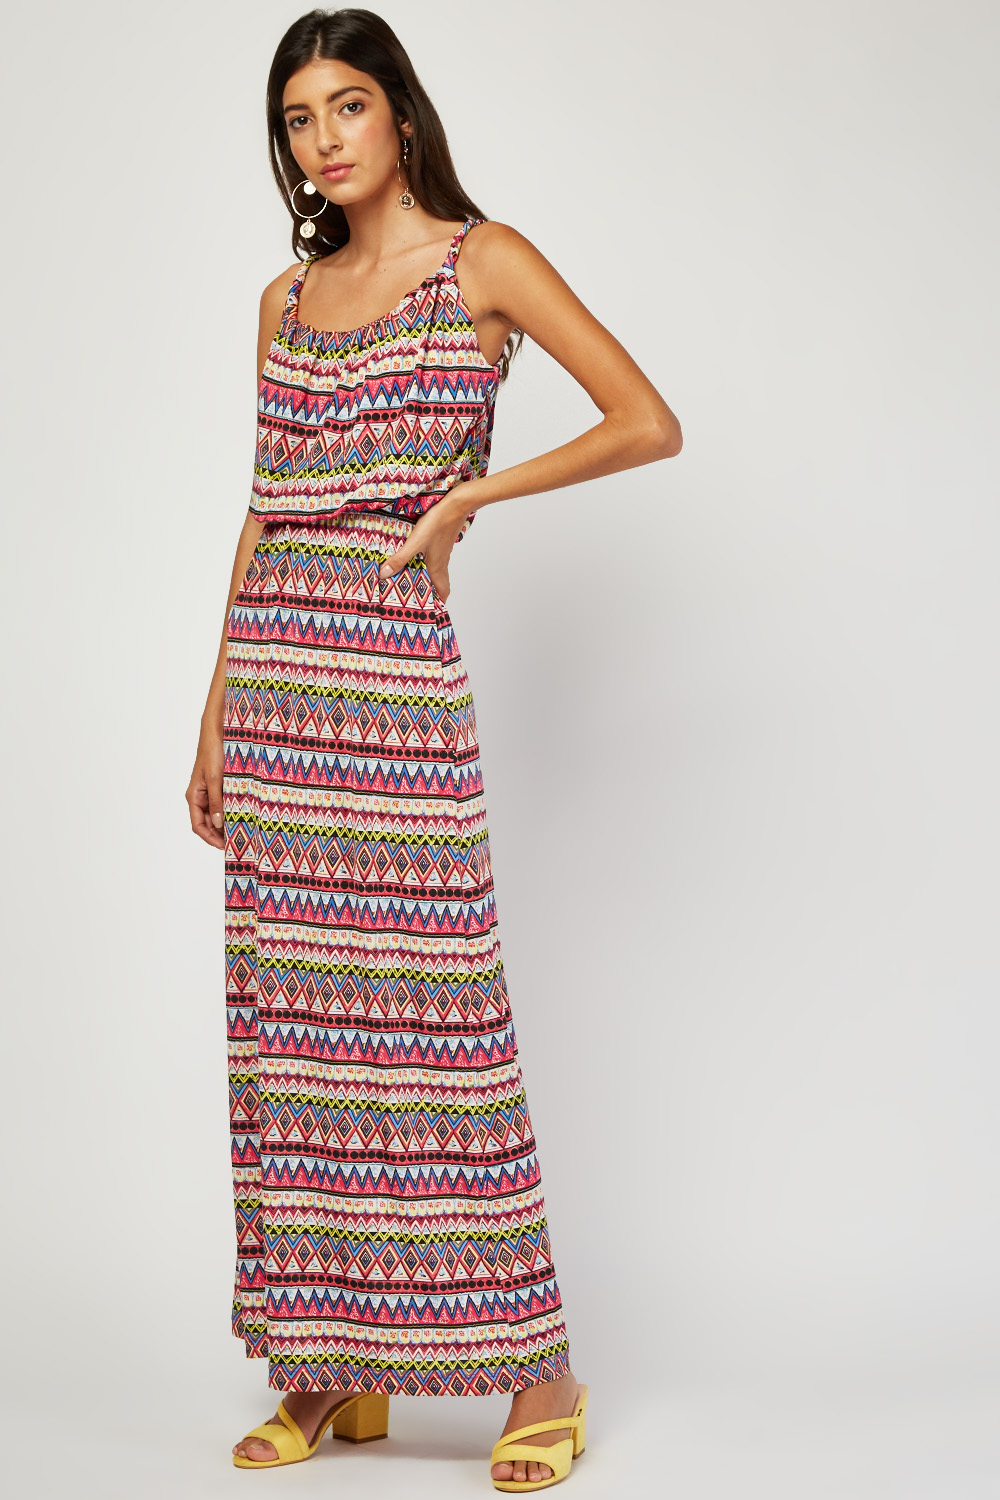 Tribal Aztec Print Maxi Dress - Just $7